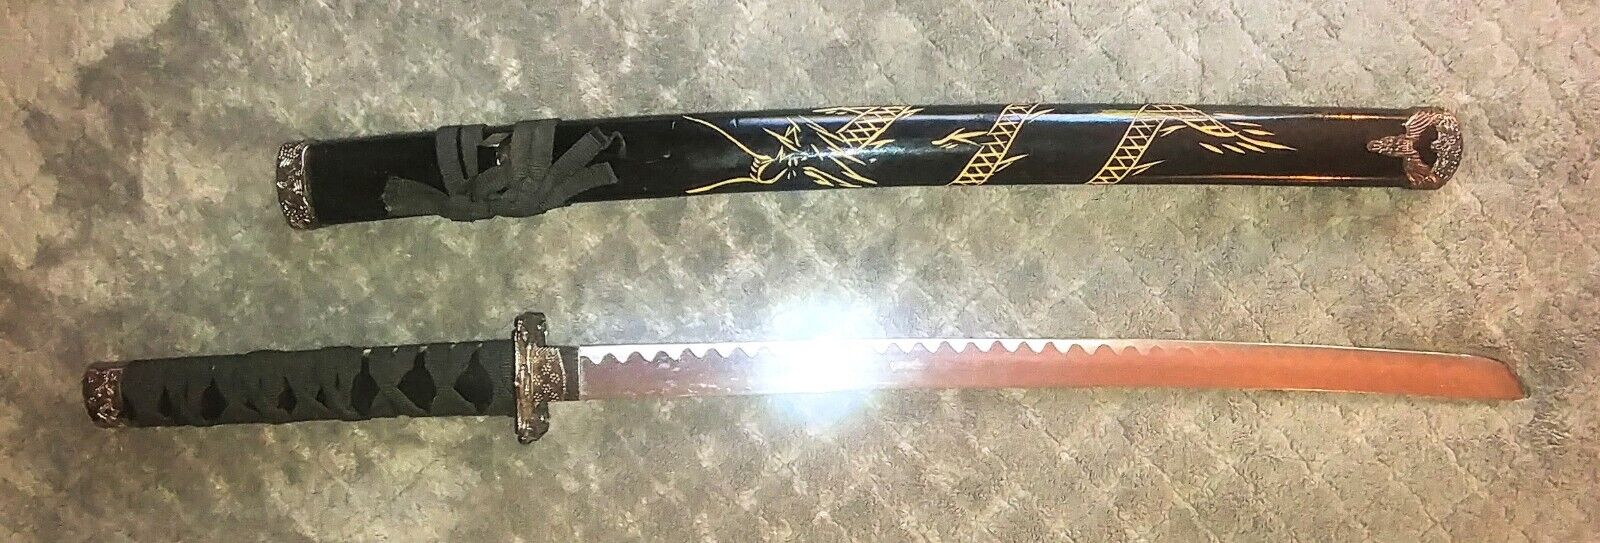 27” Mini-Katana Black Wooden Samurai Ninja Short Sword Knife Prop with Scabbard